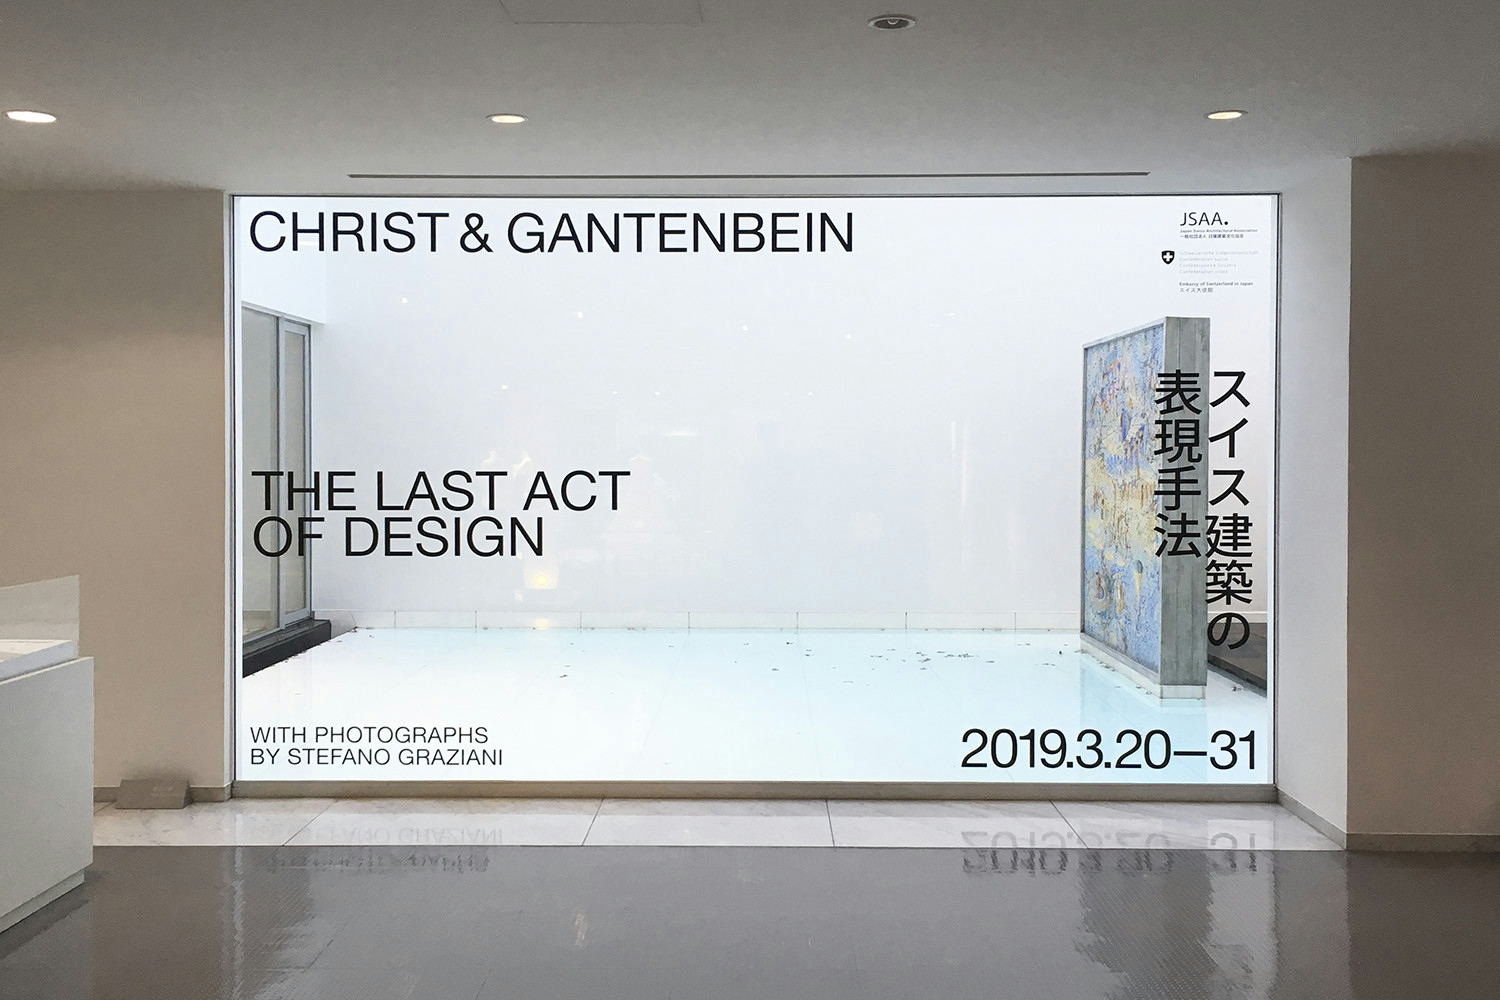 Christ & Gantenbein – The Last Act of Design booklet exhibition signage